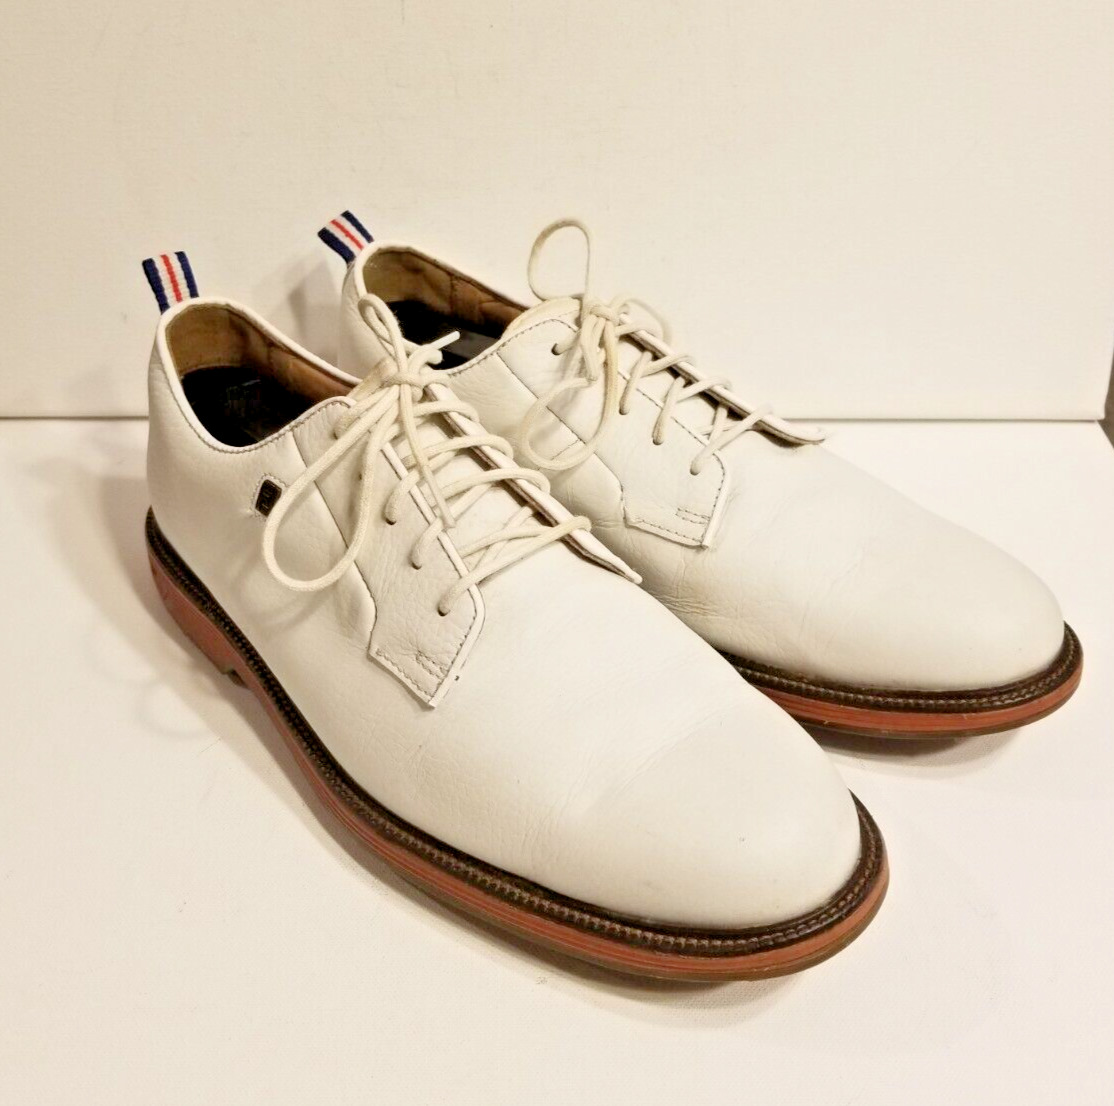 FootJoy Dryjoys Premiere Series Field Golf Shoes Size 9.5 - White/Brick 53989